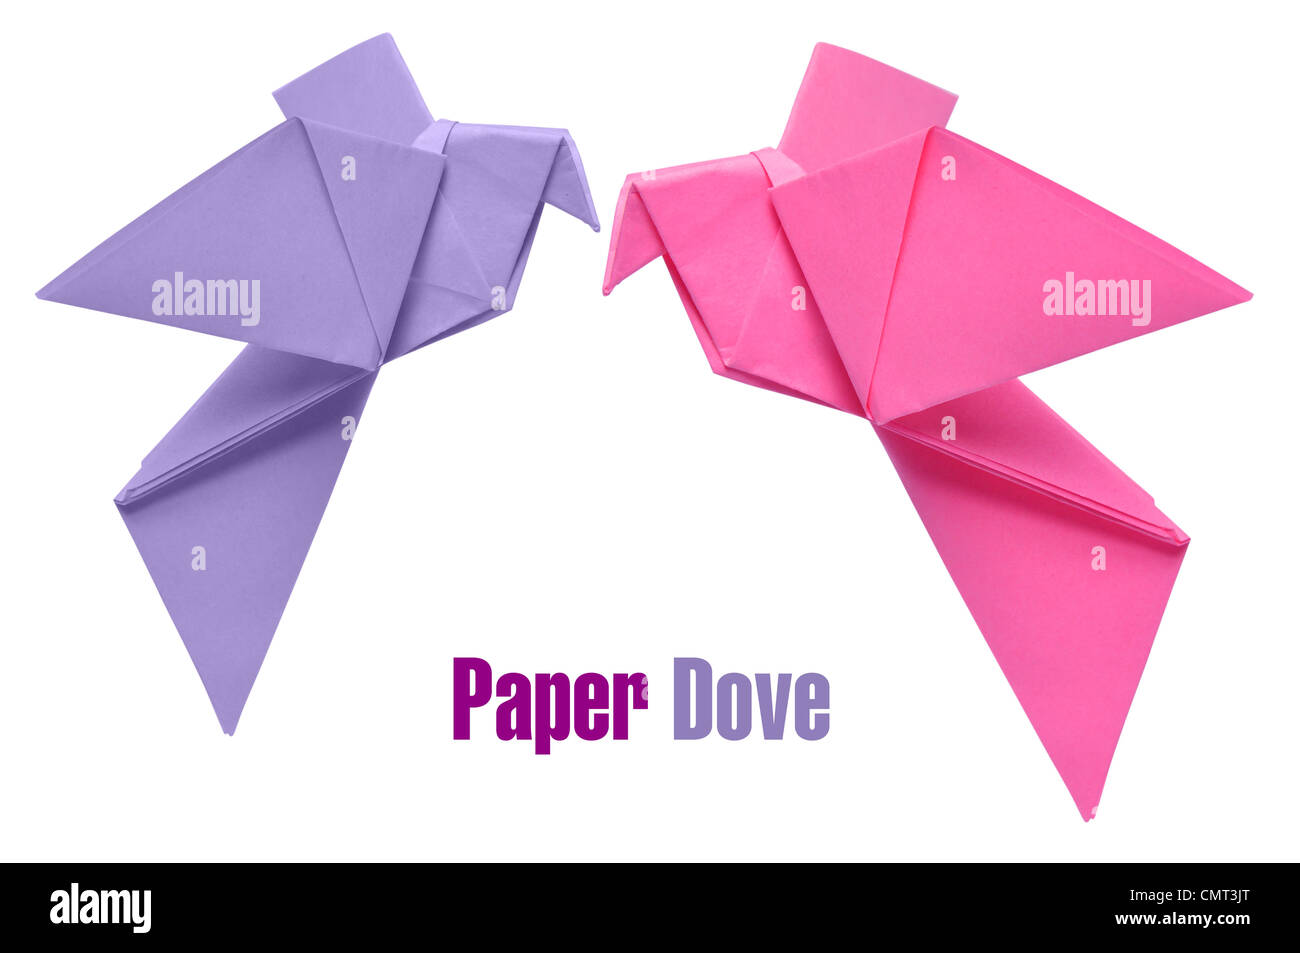 Paper Birds--Five Small White Paper Doves